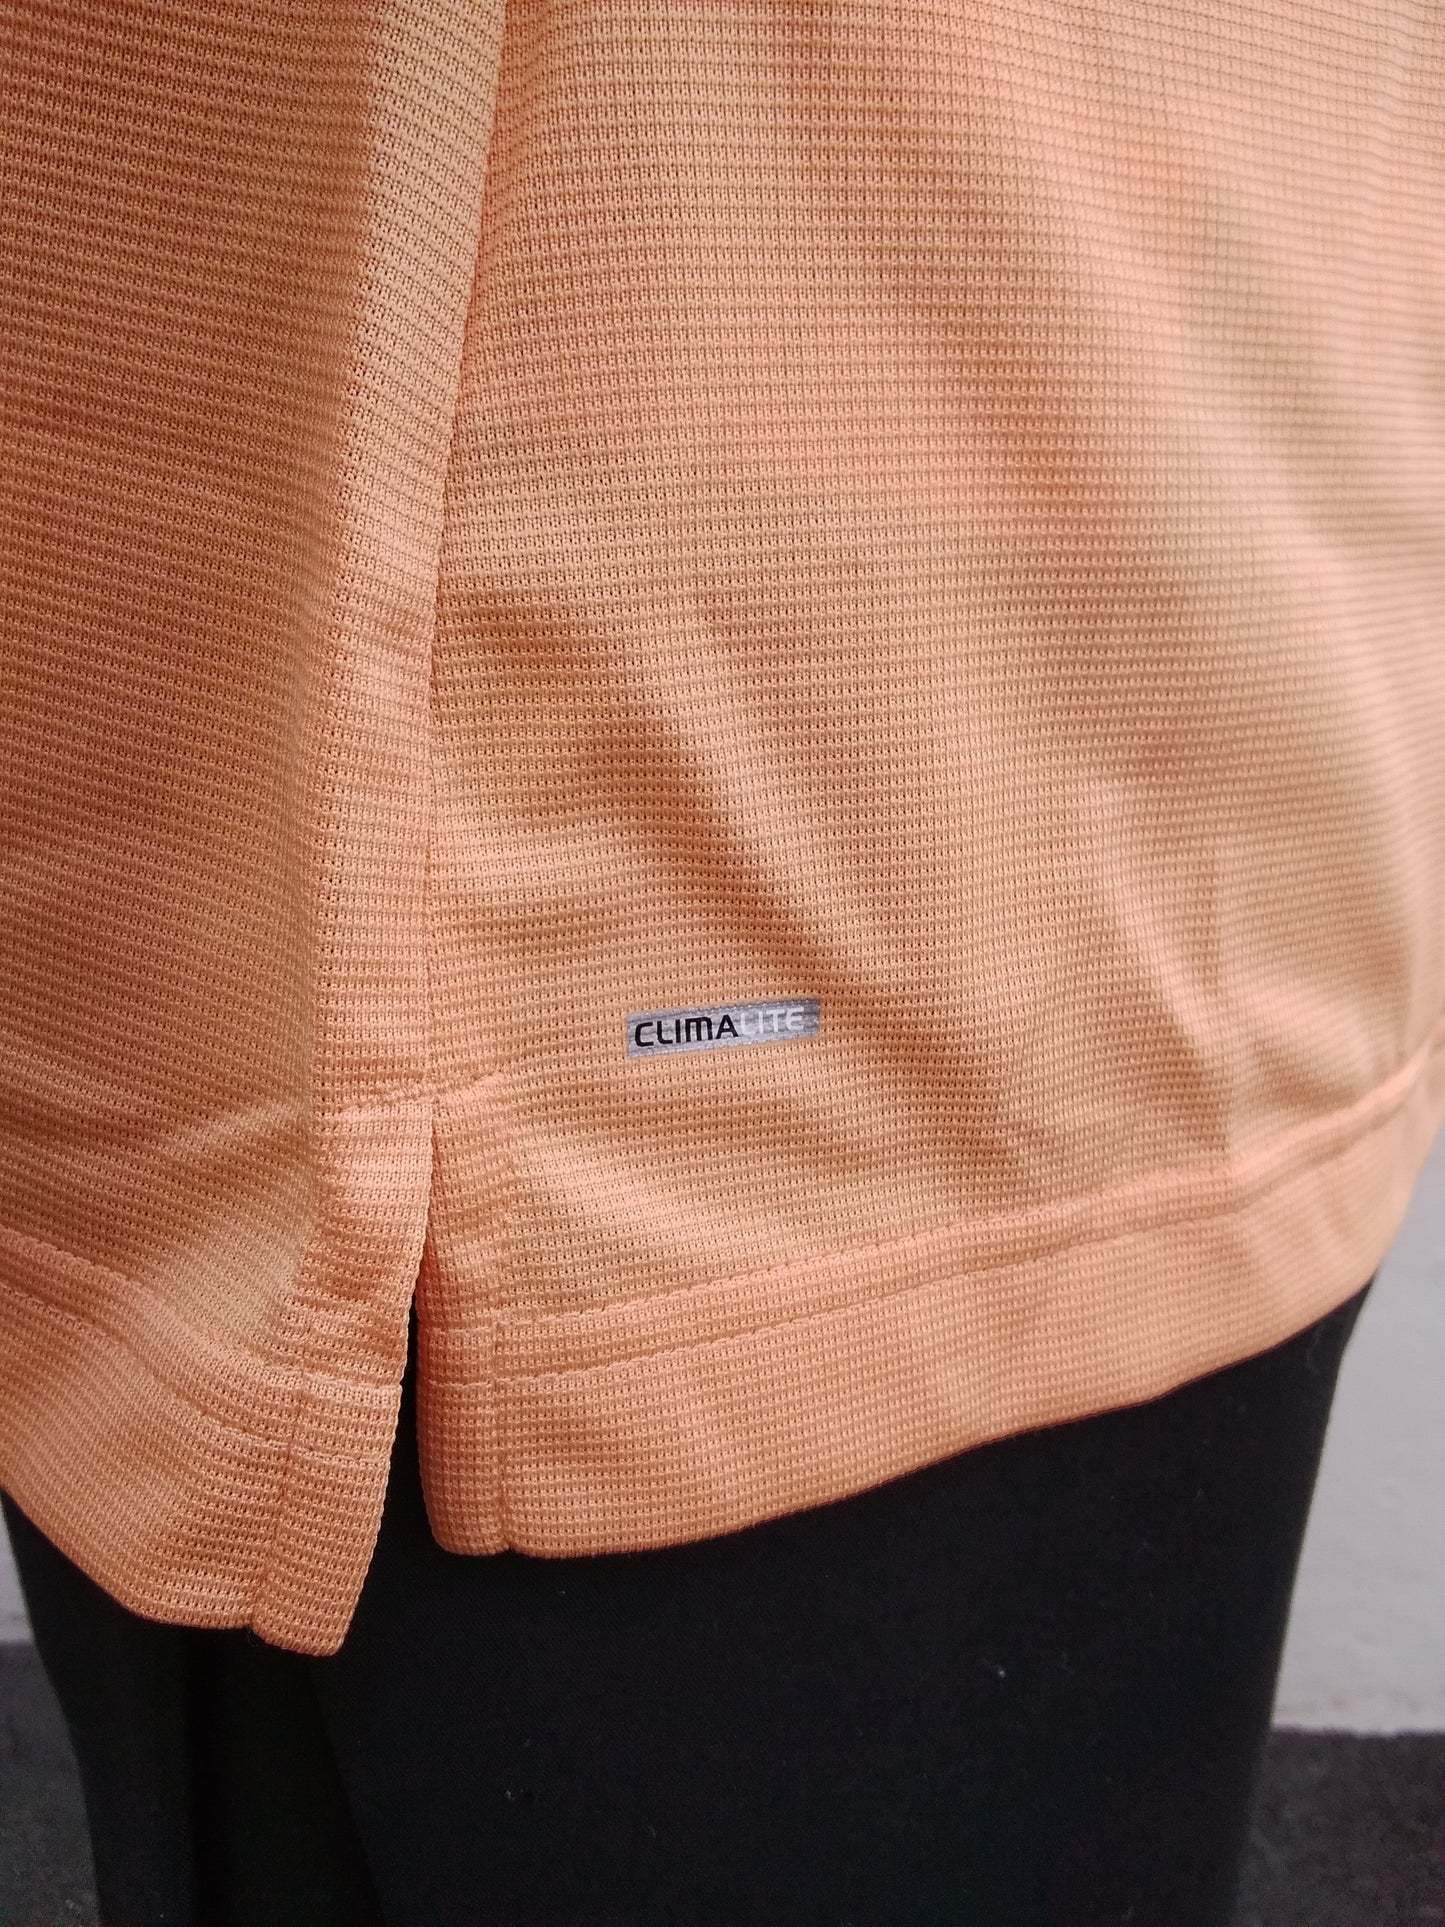 NWT - Adidas Golf peach Climalite Textured Solid Polo Shirt - S